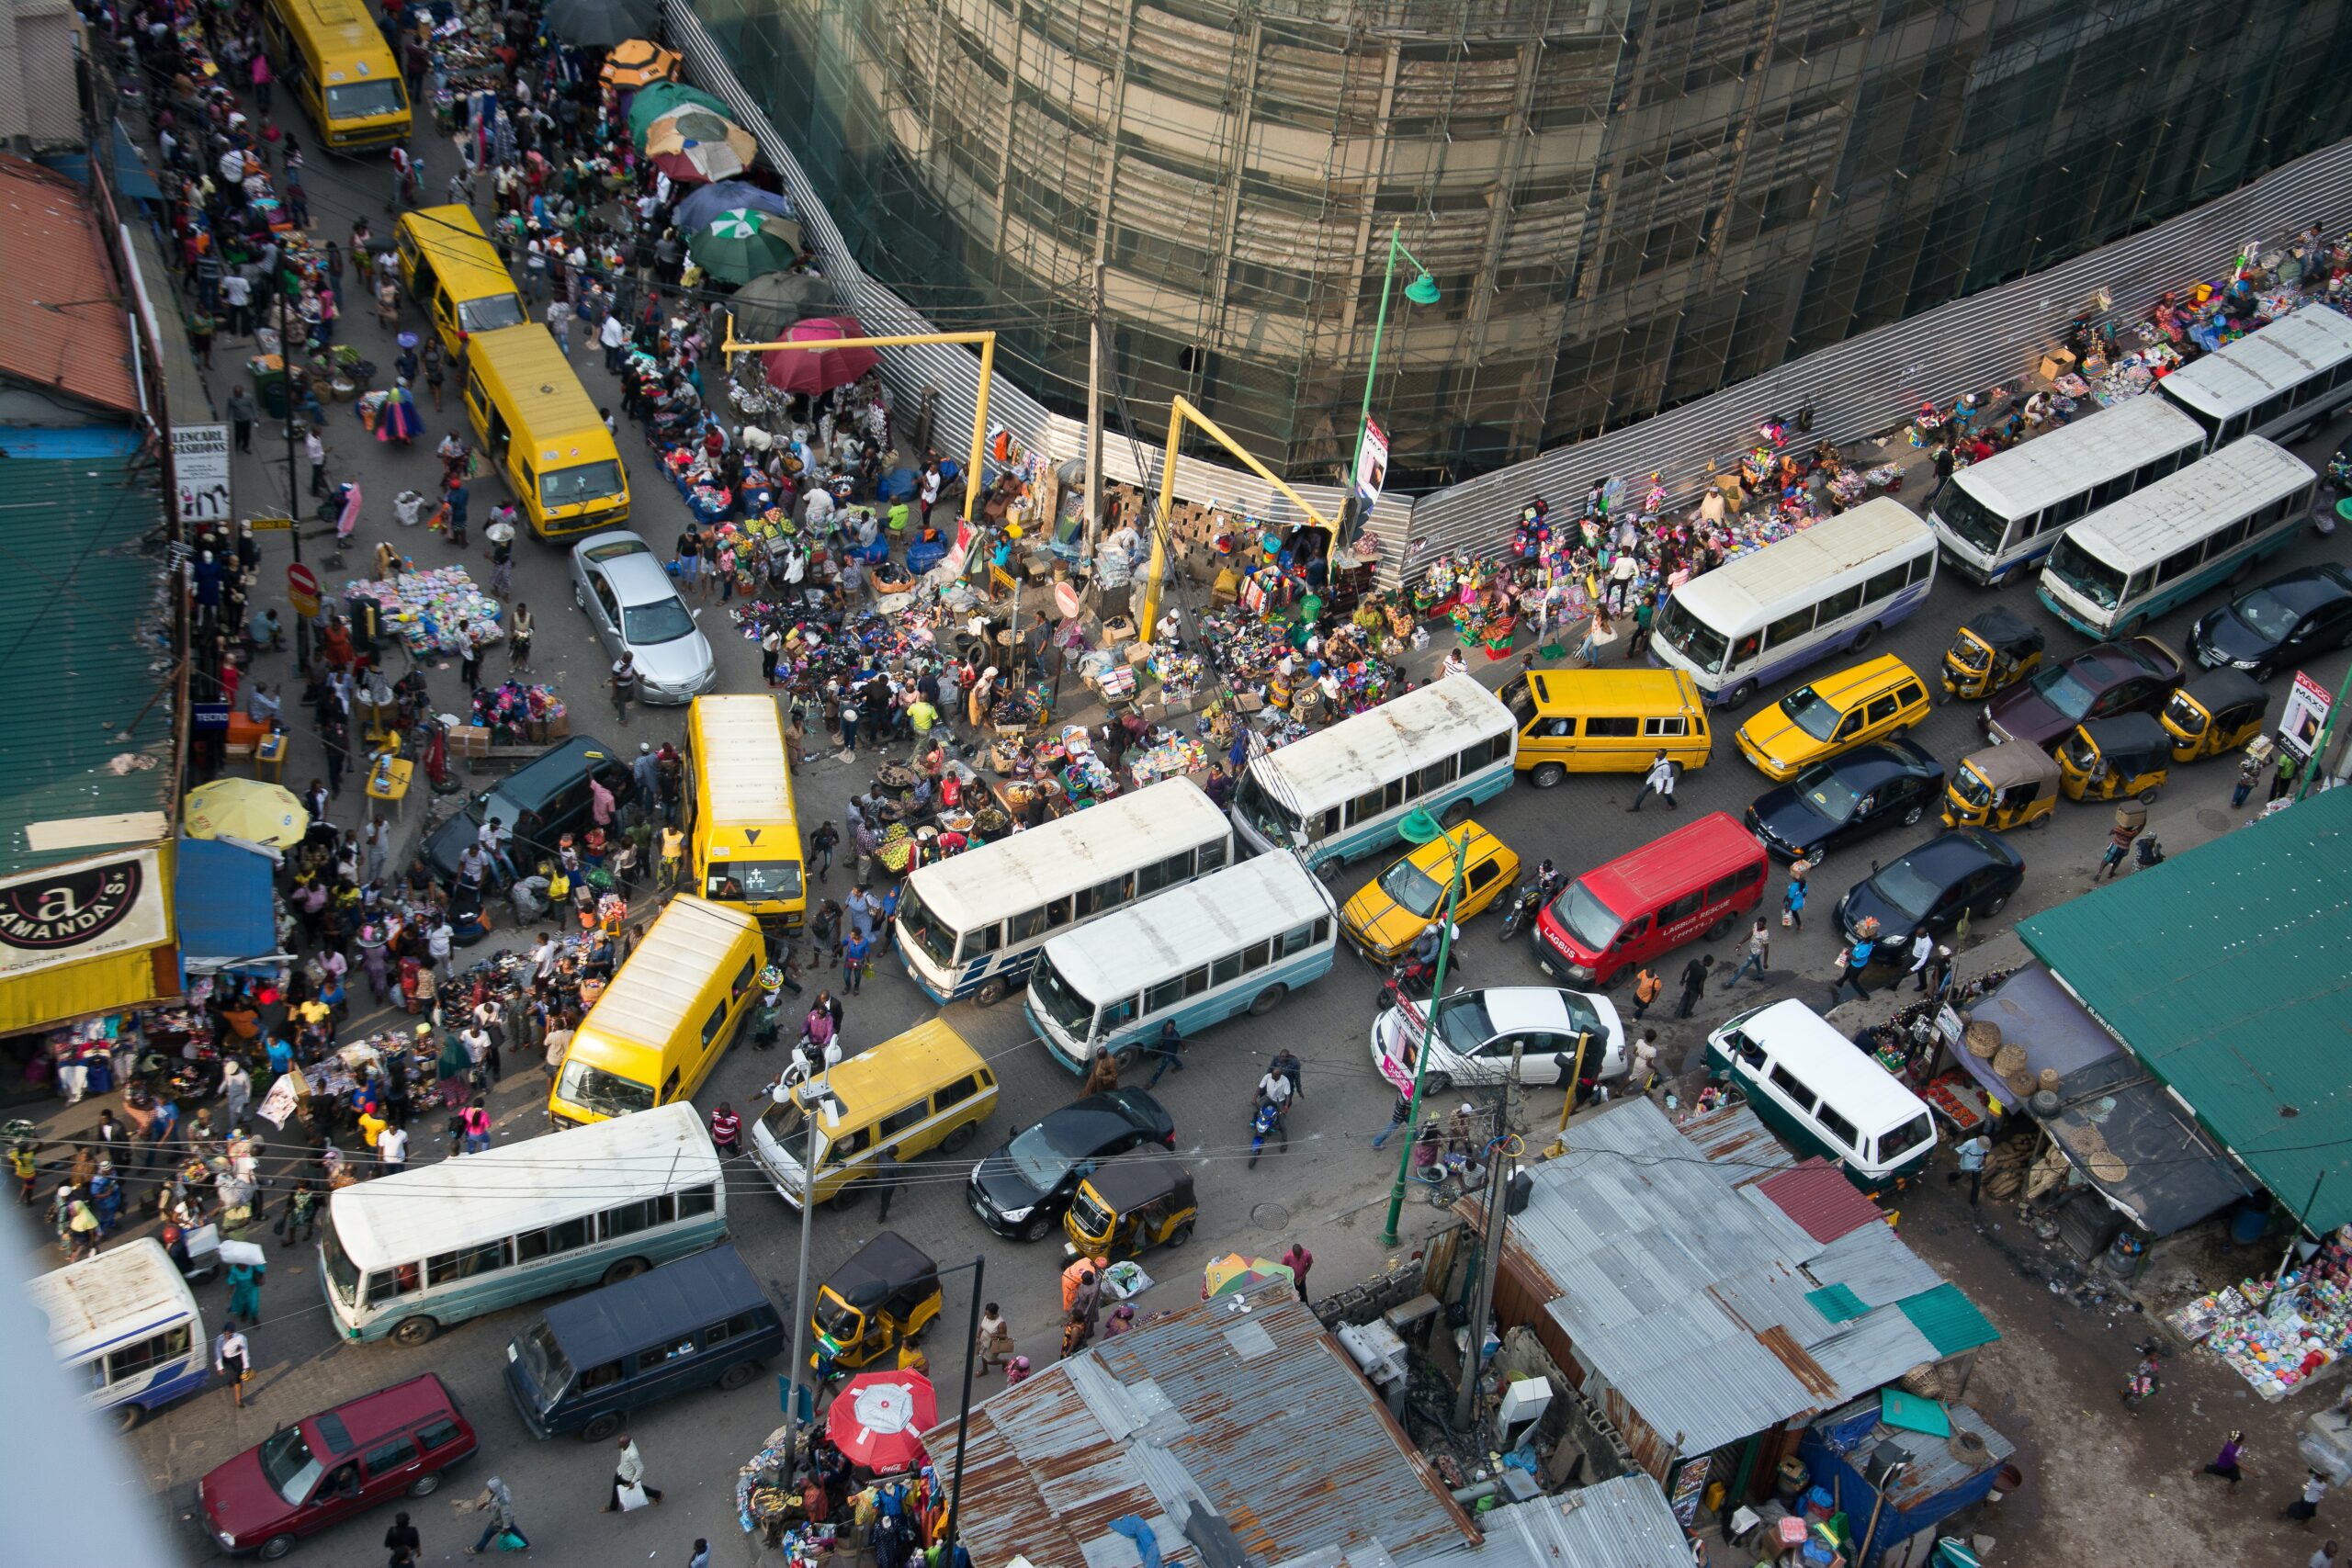 Public Transportation in Africa: A Roadmap To A Fuller Understanding